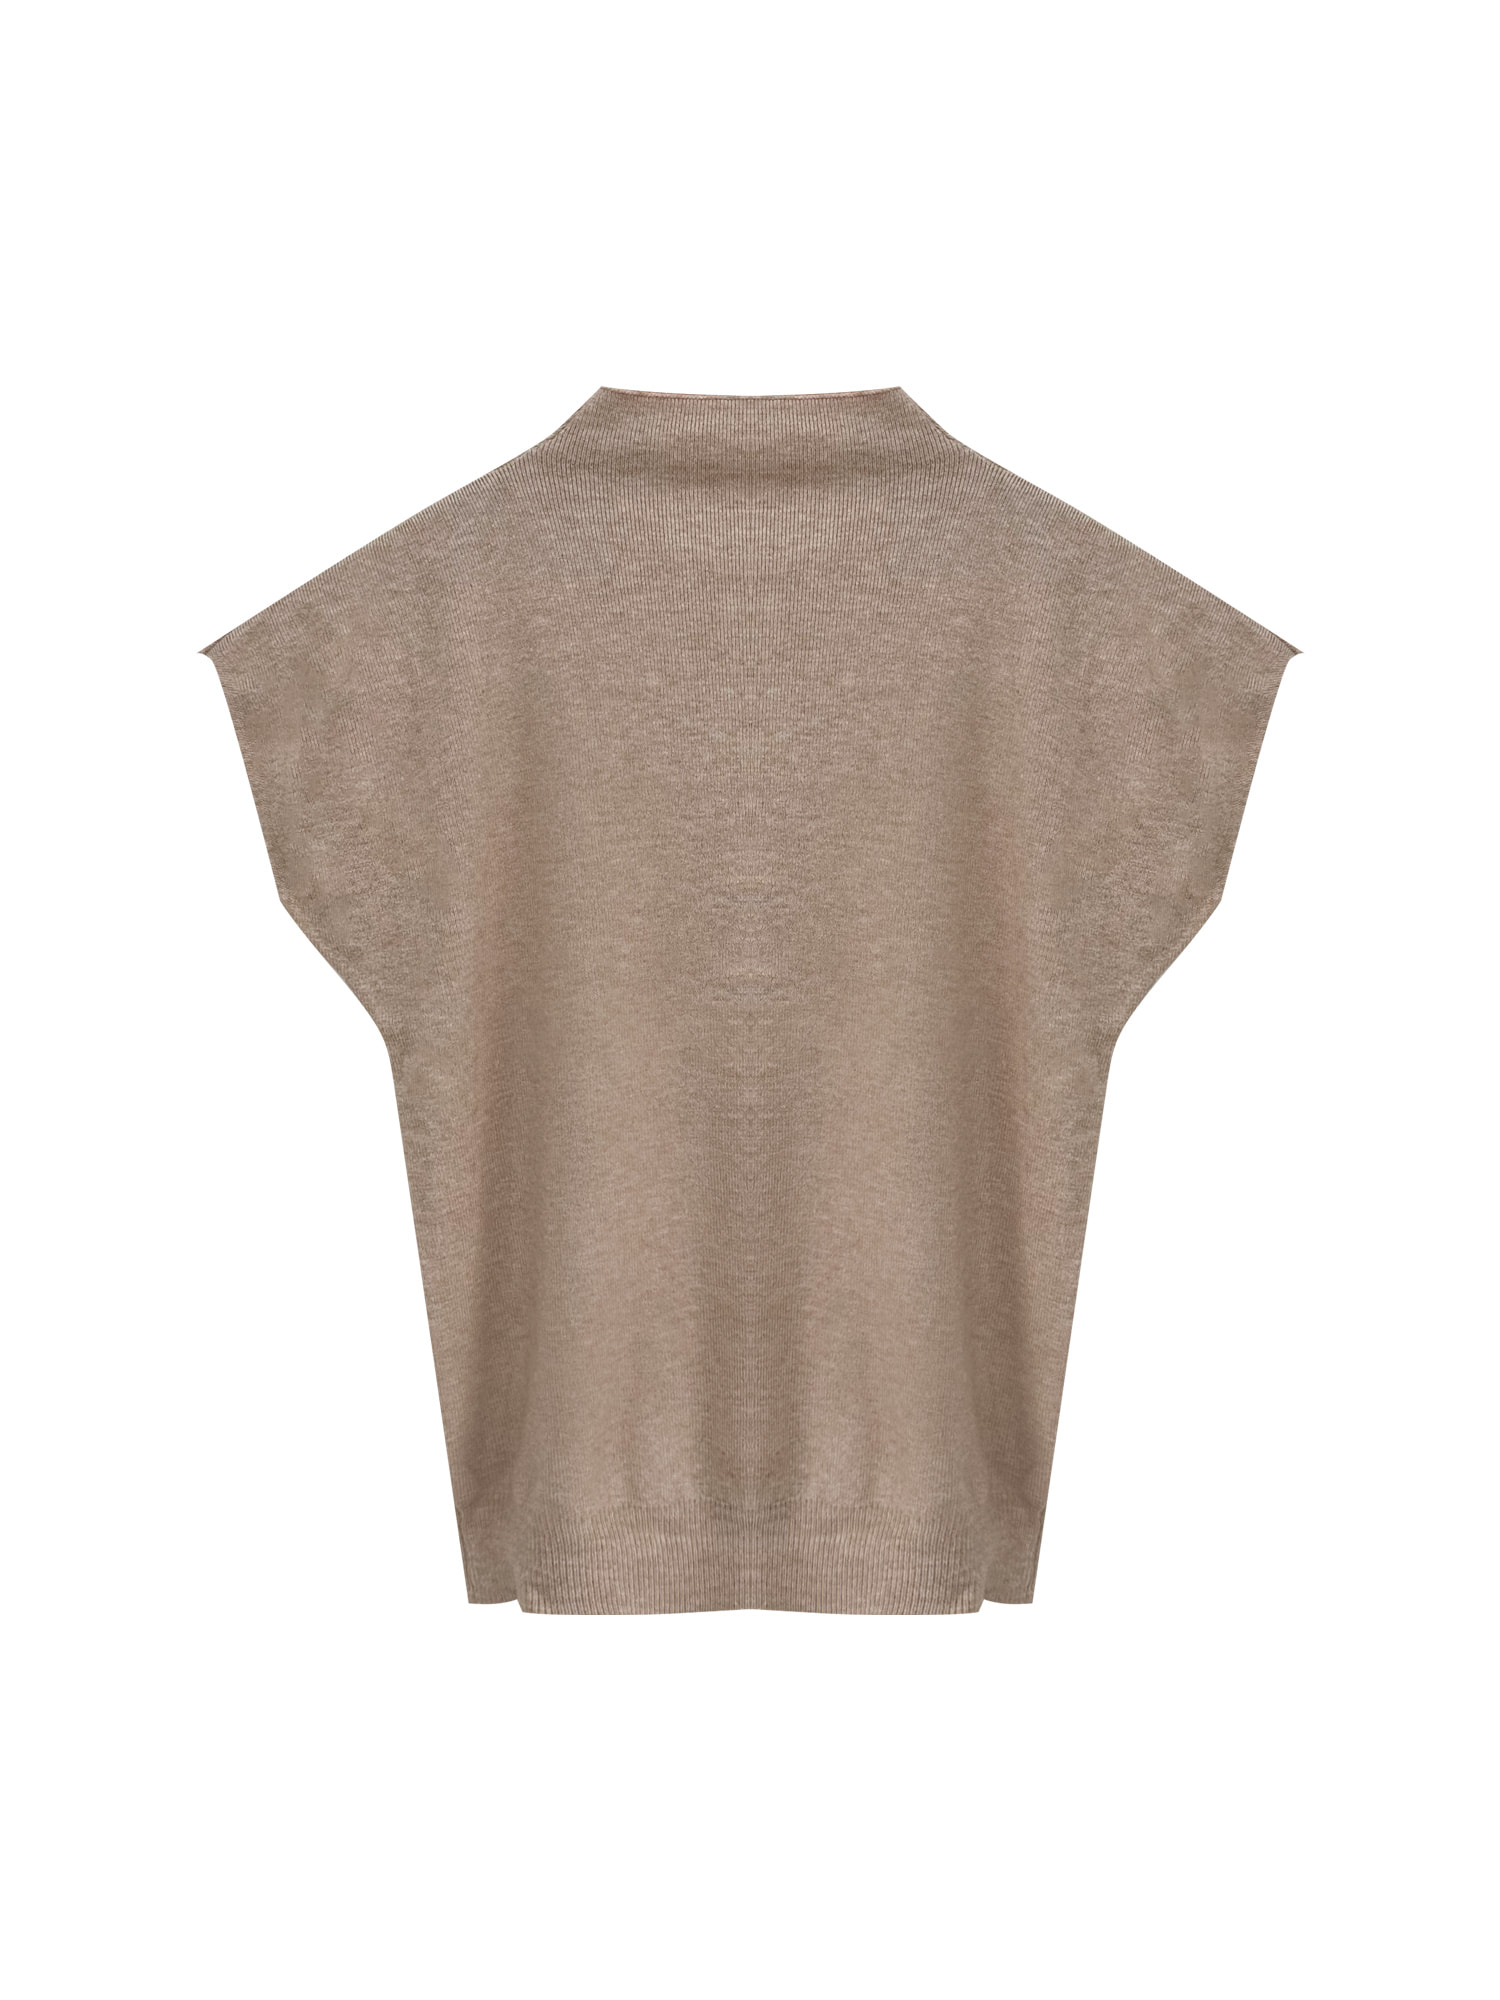 cashmere knit _ beige